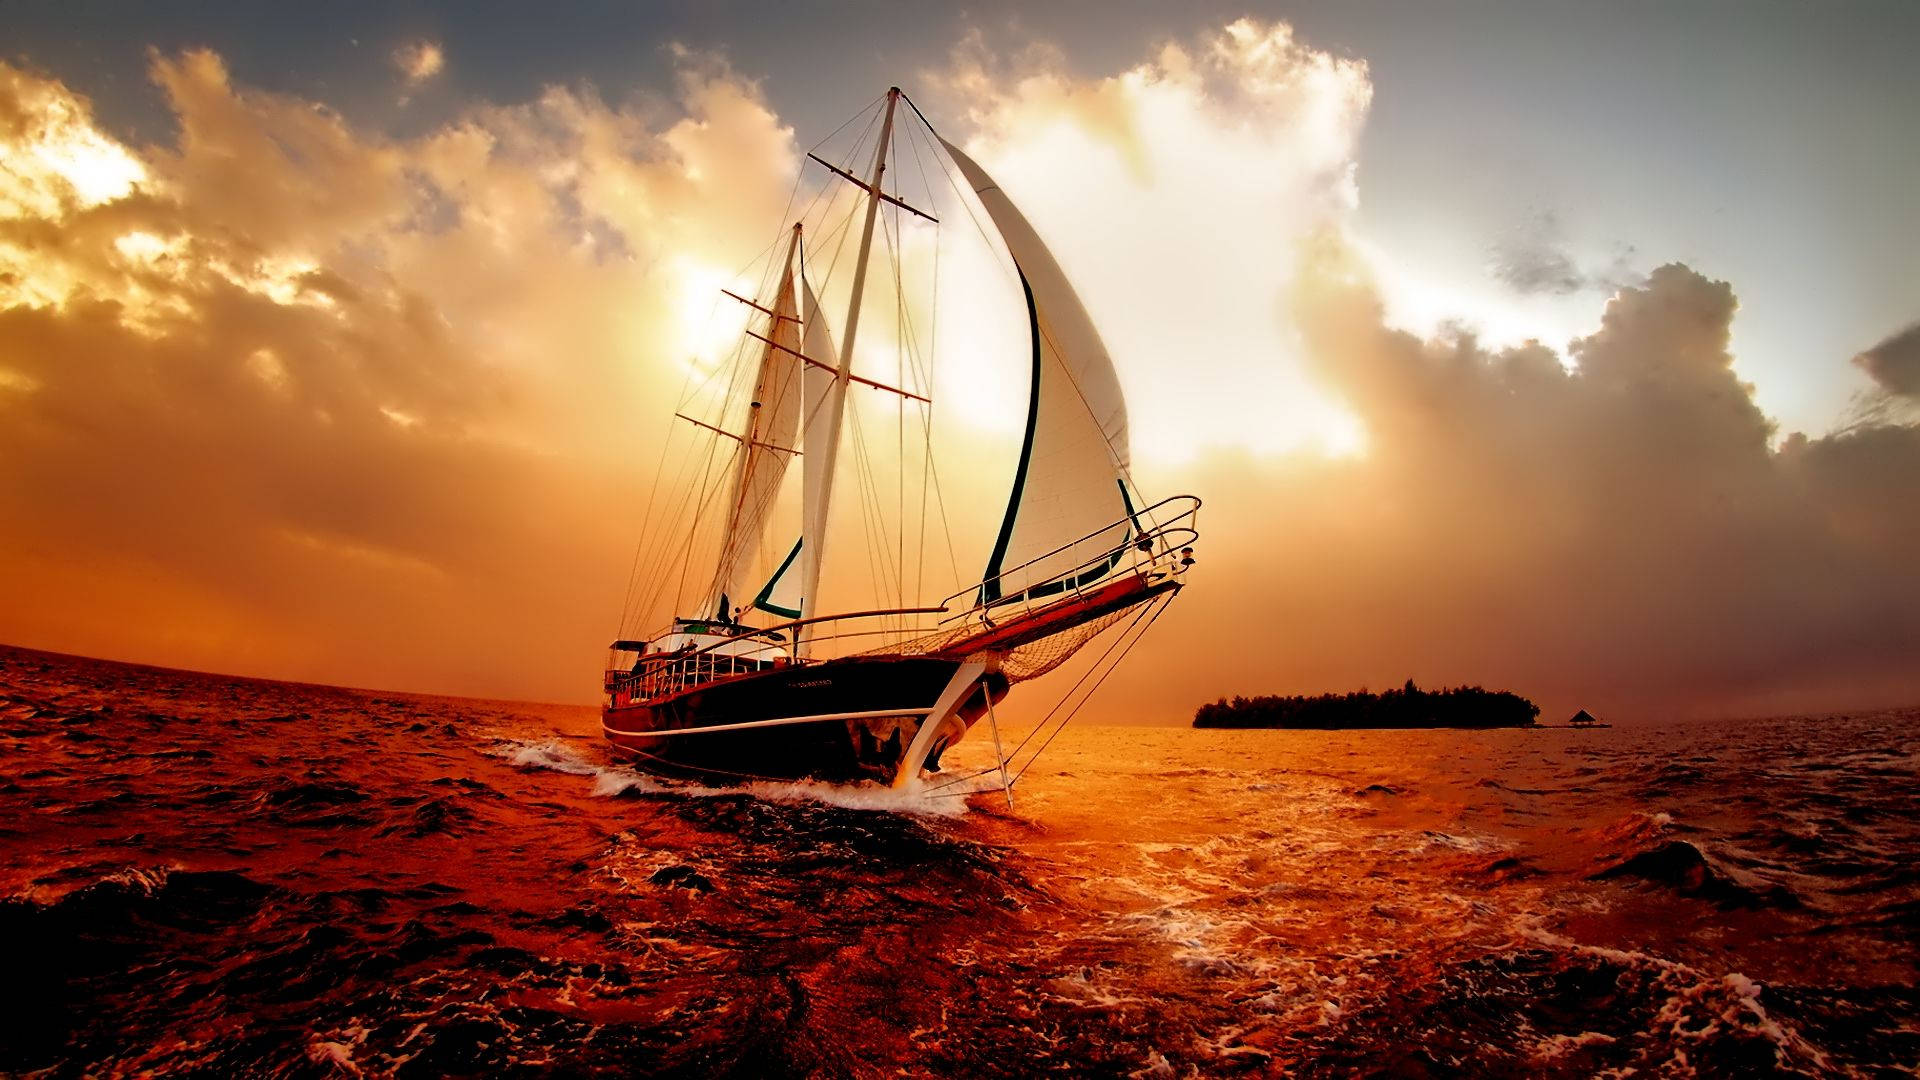 Hd Ship In The Sea Sunset